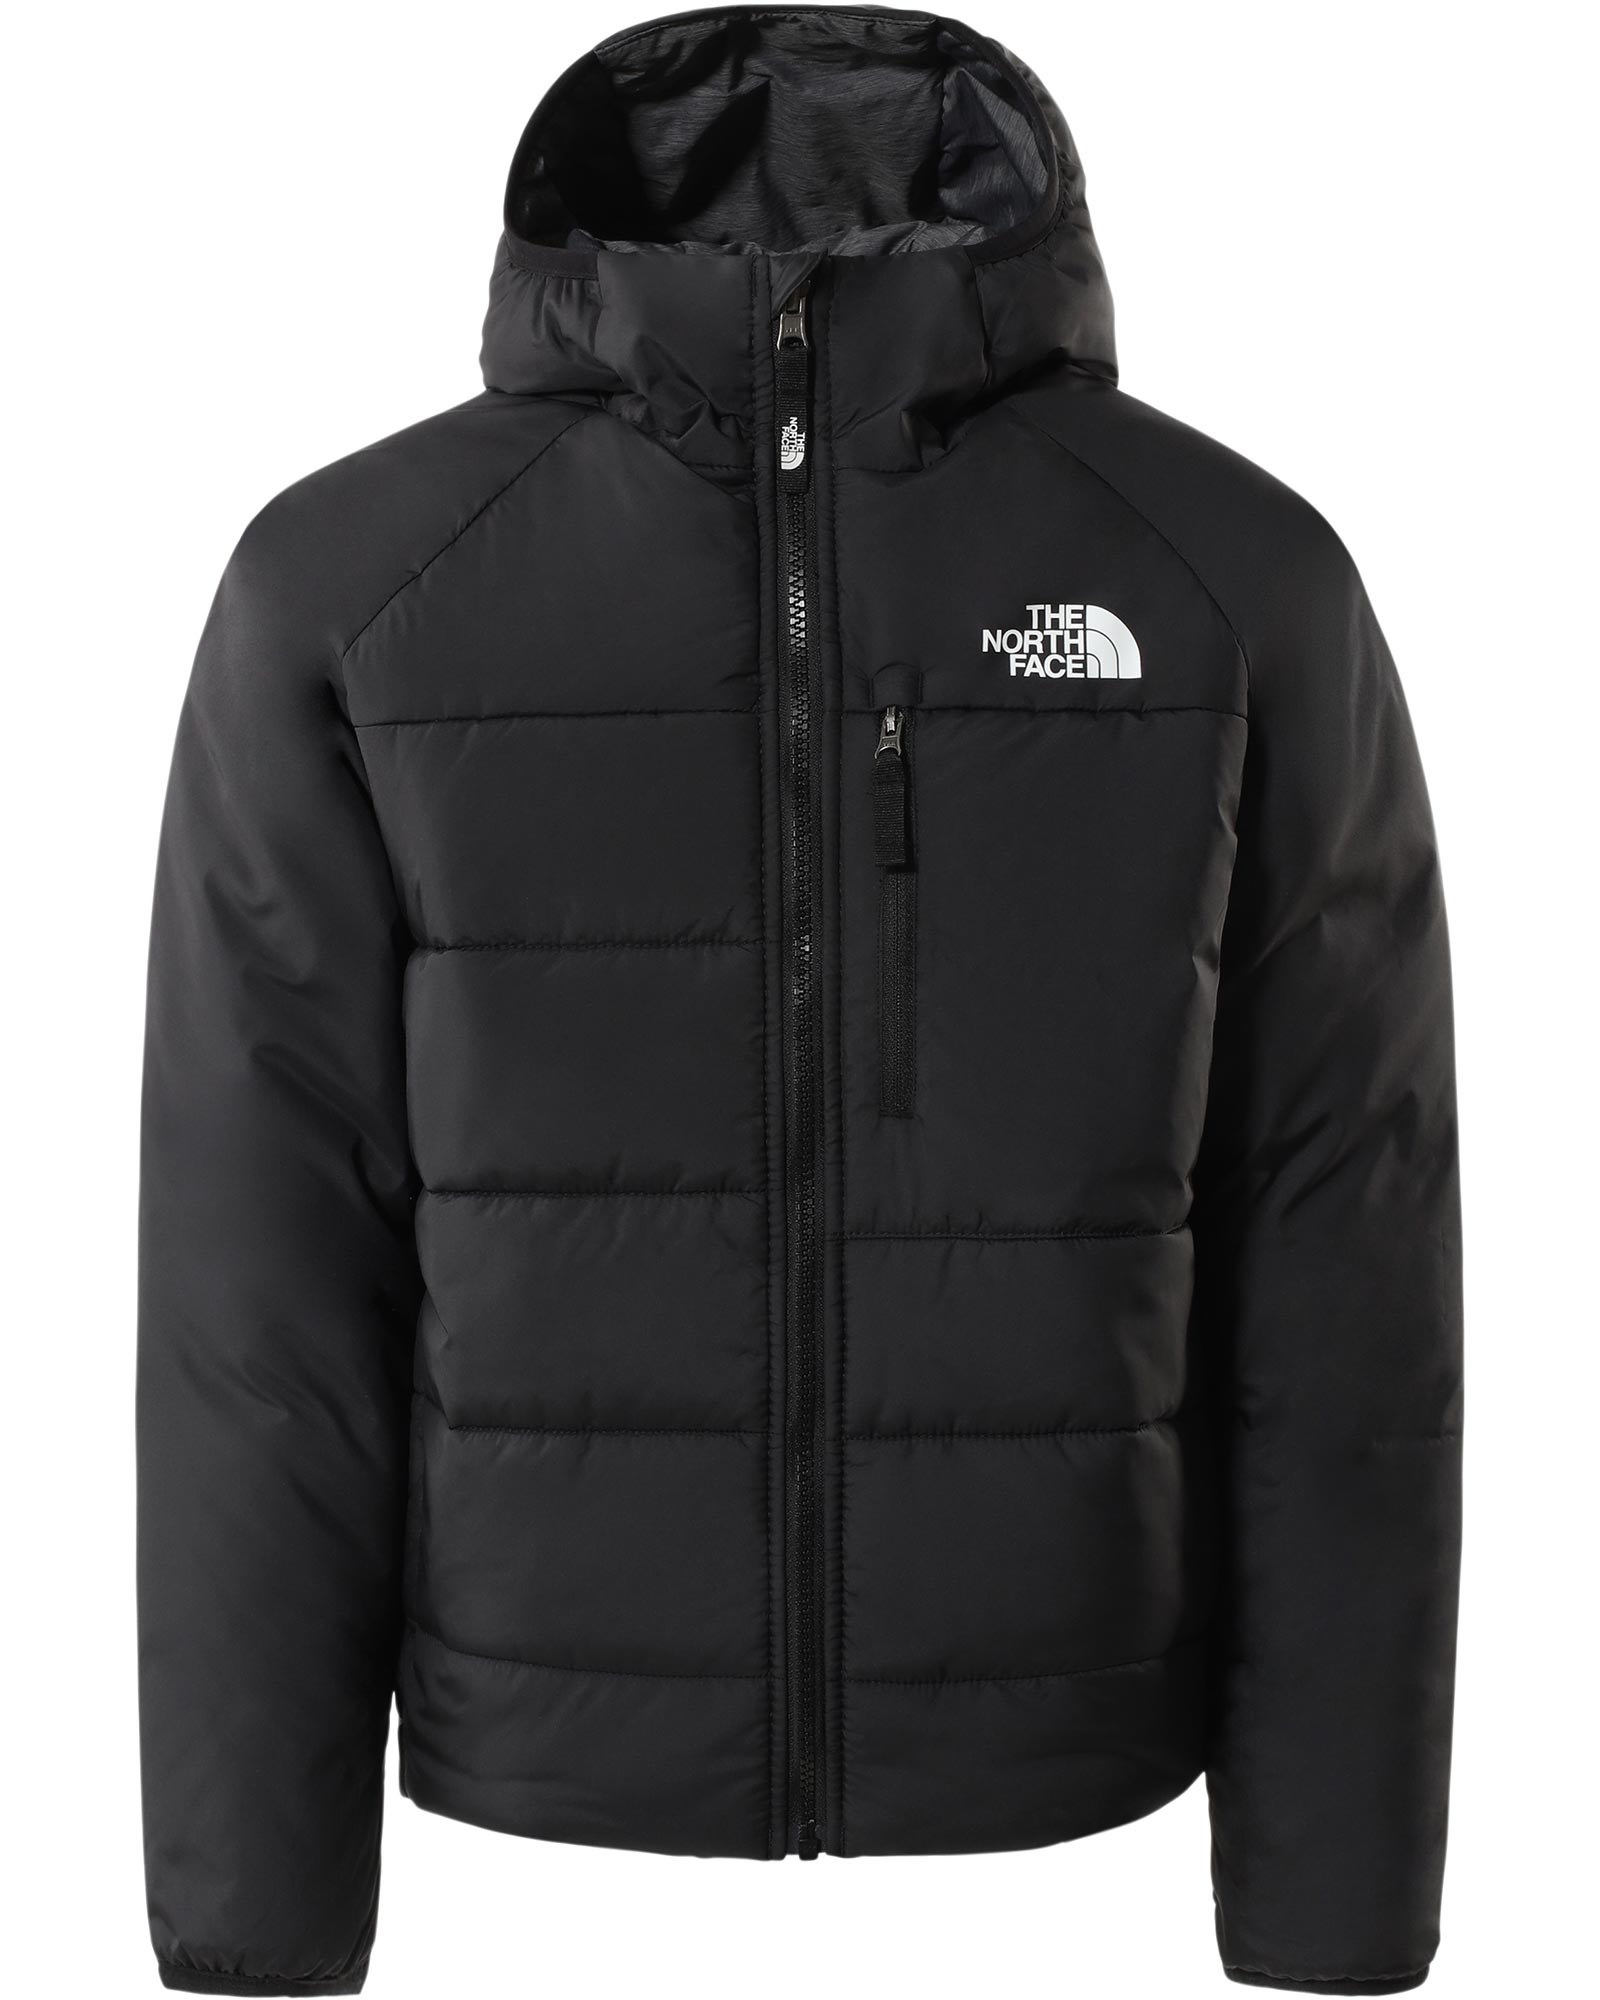 The North Face Reversible Perrito Boys Jacket Xl